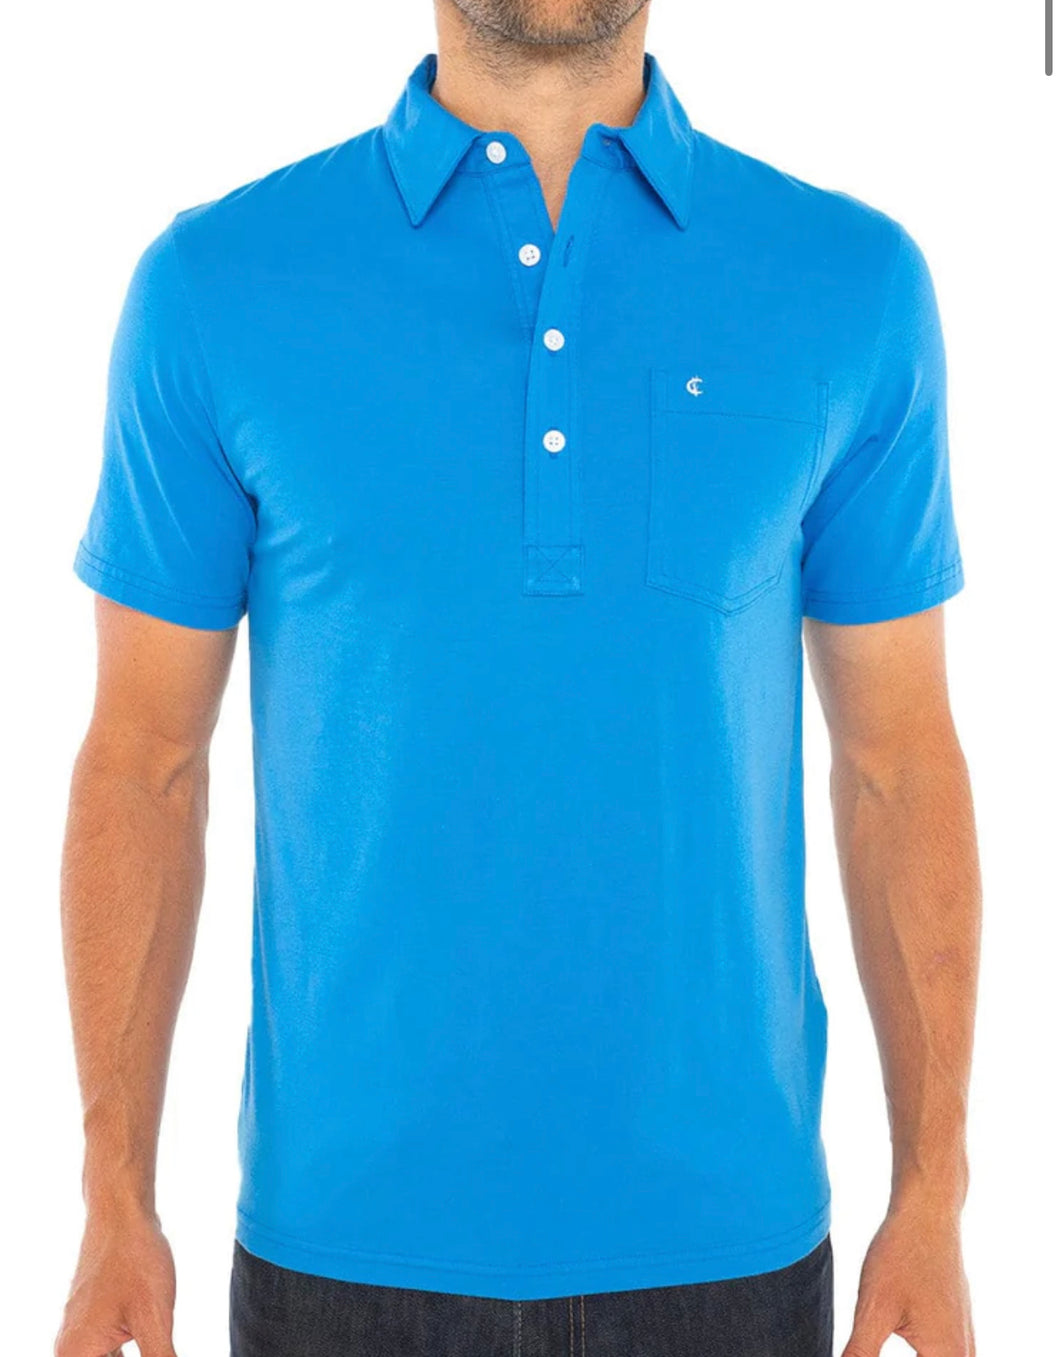 Top-Shelf Players Shirt - Motley Blue